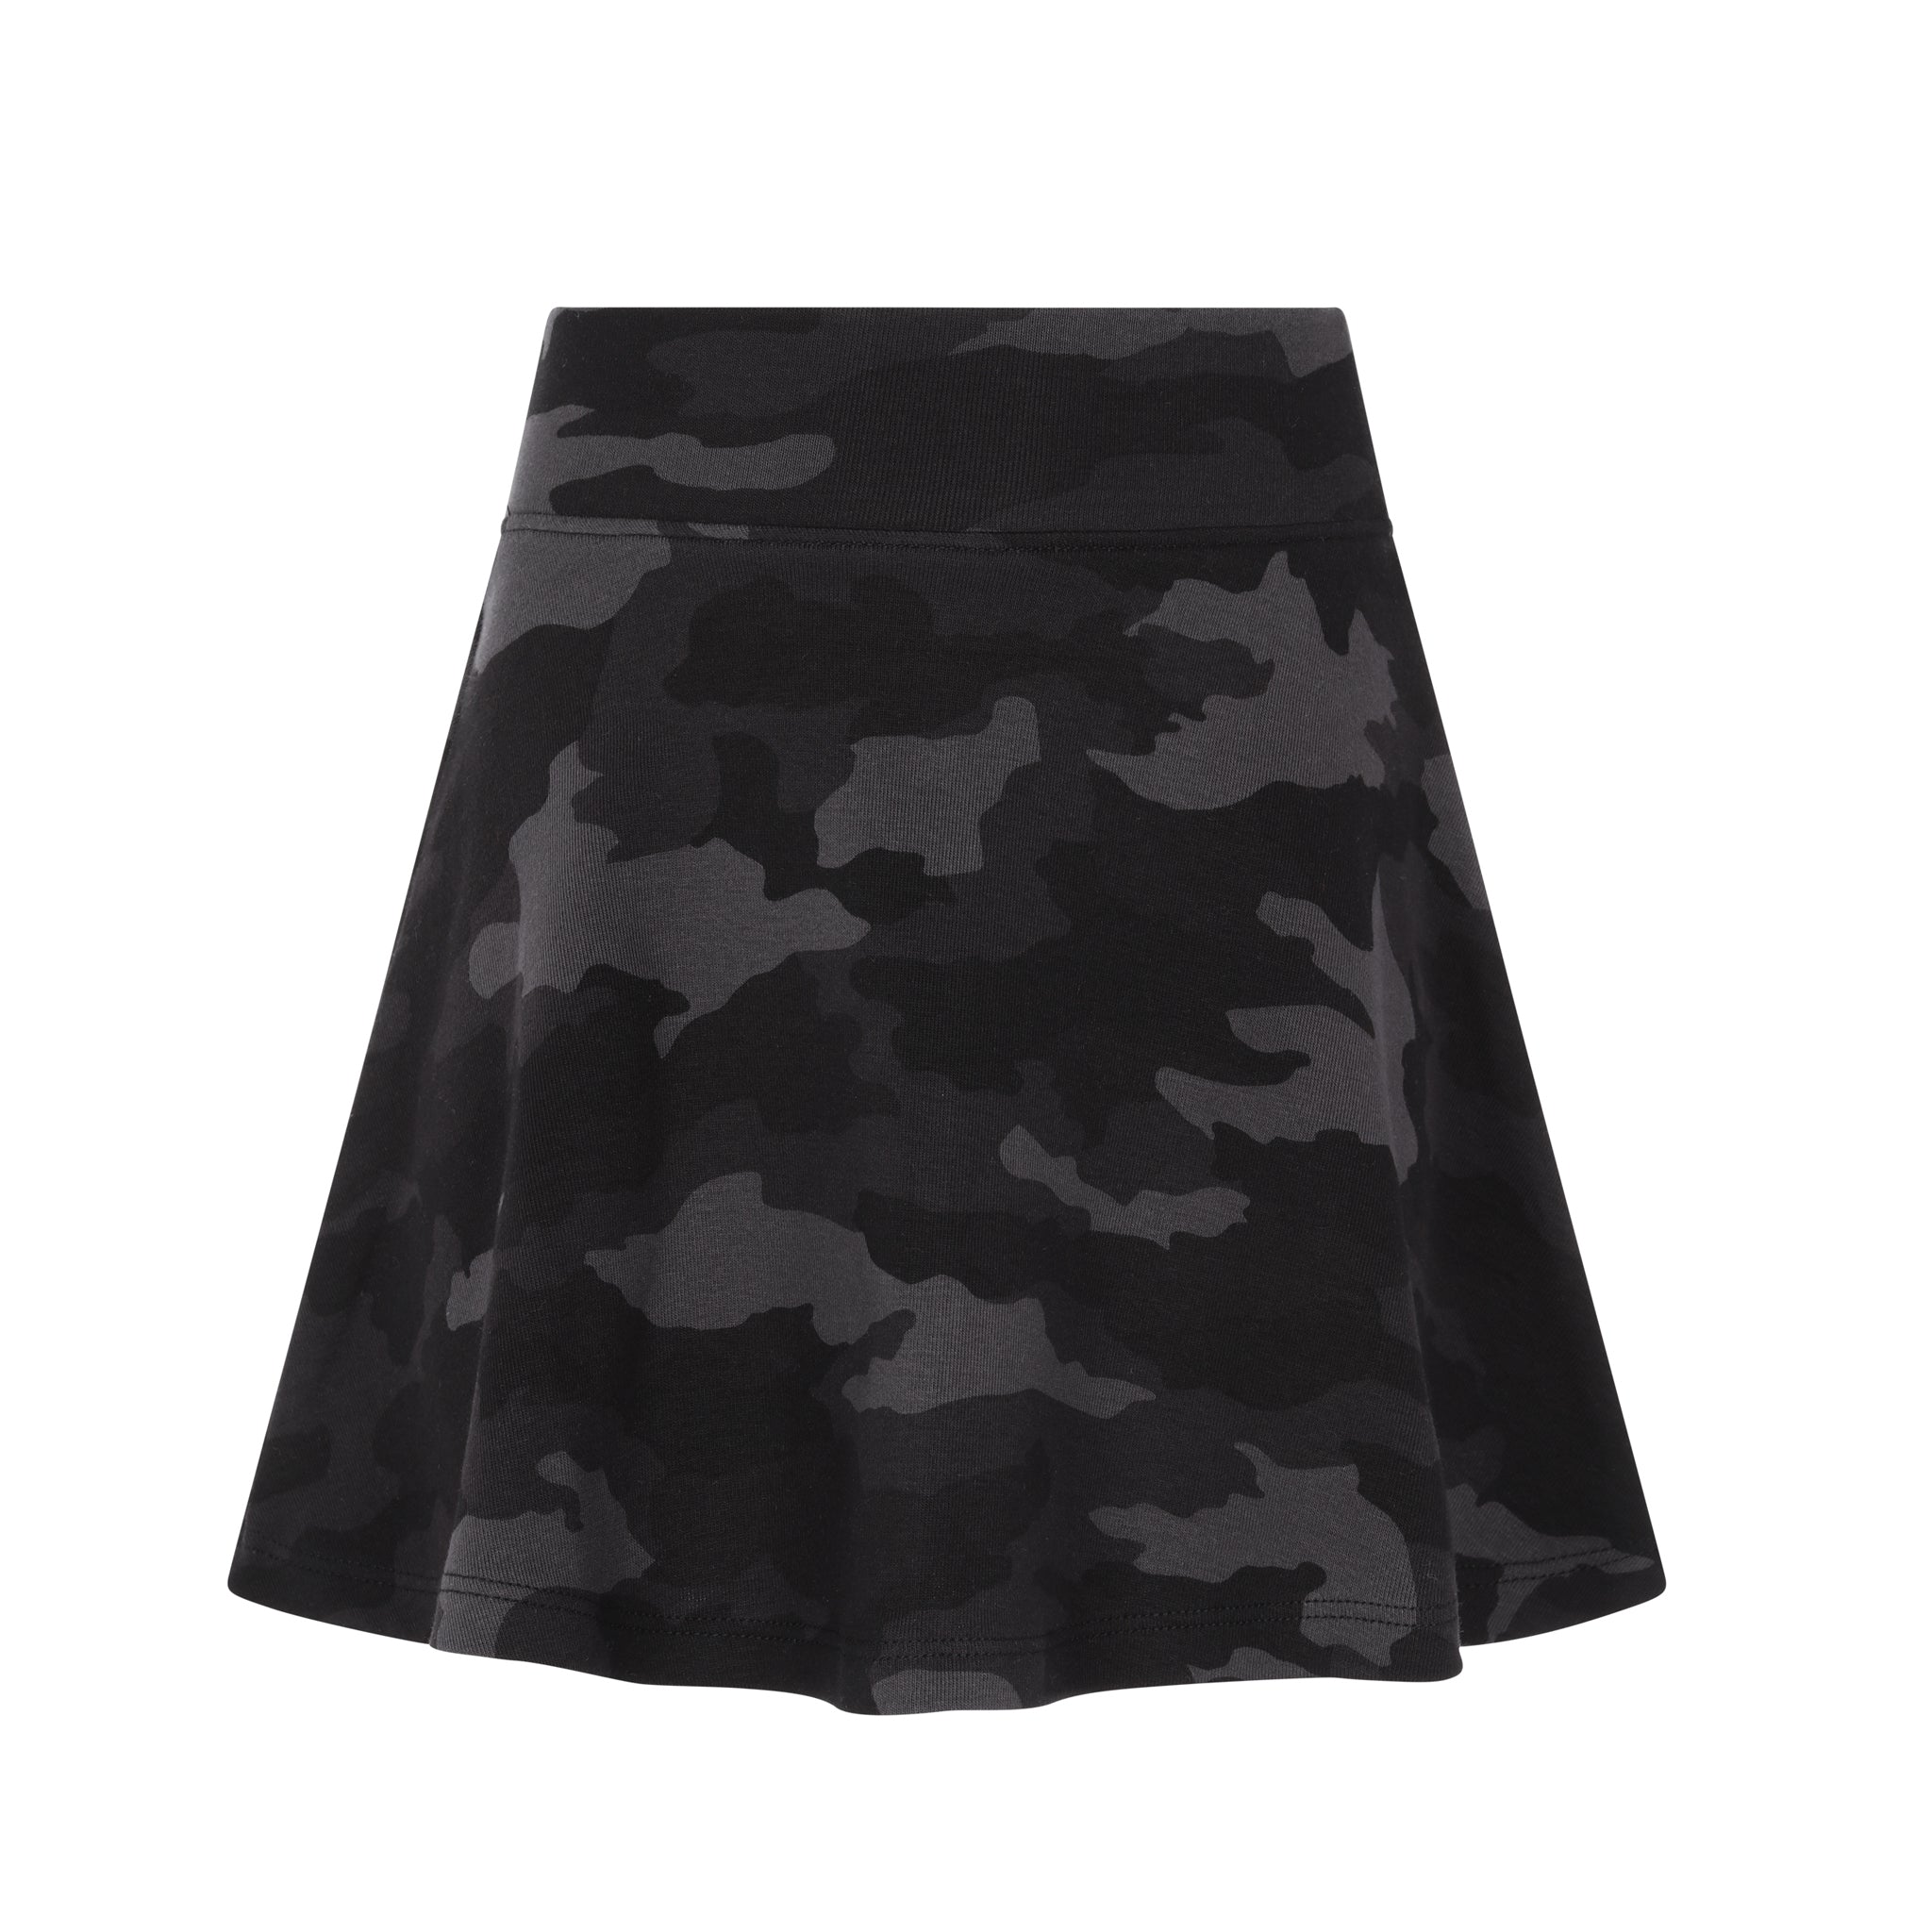 camo skirt black and white